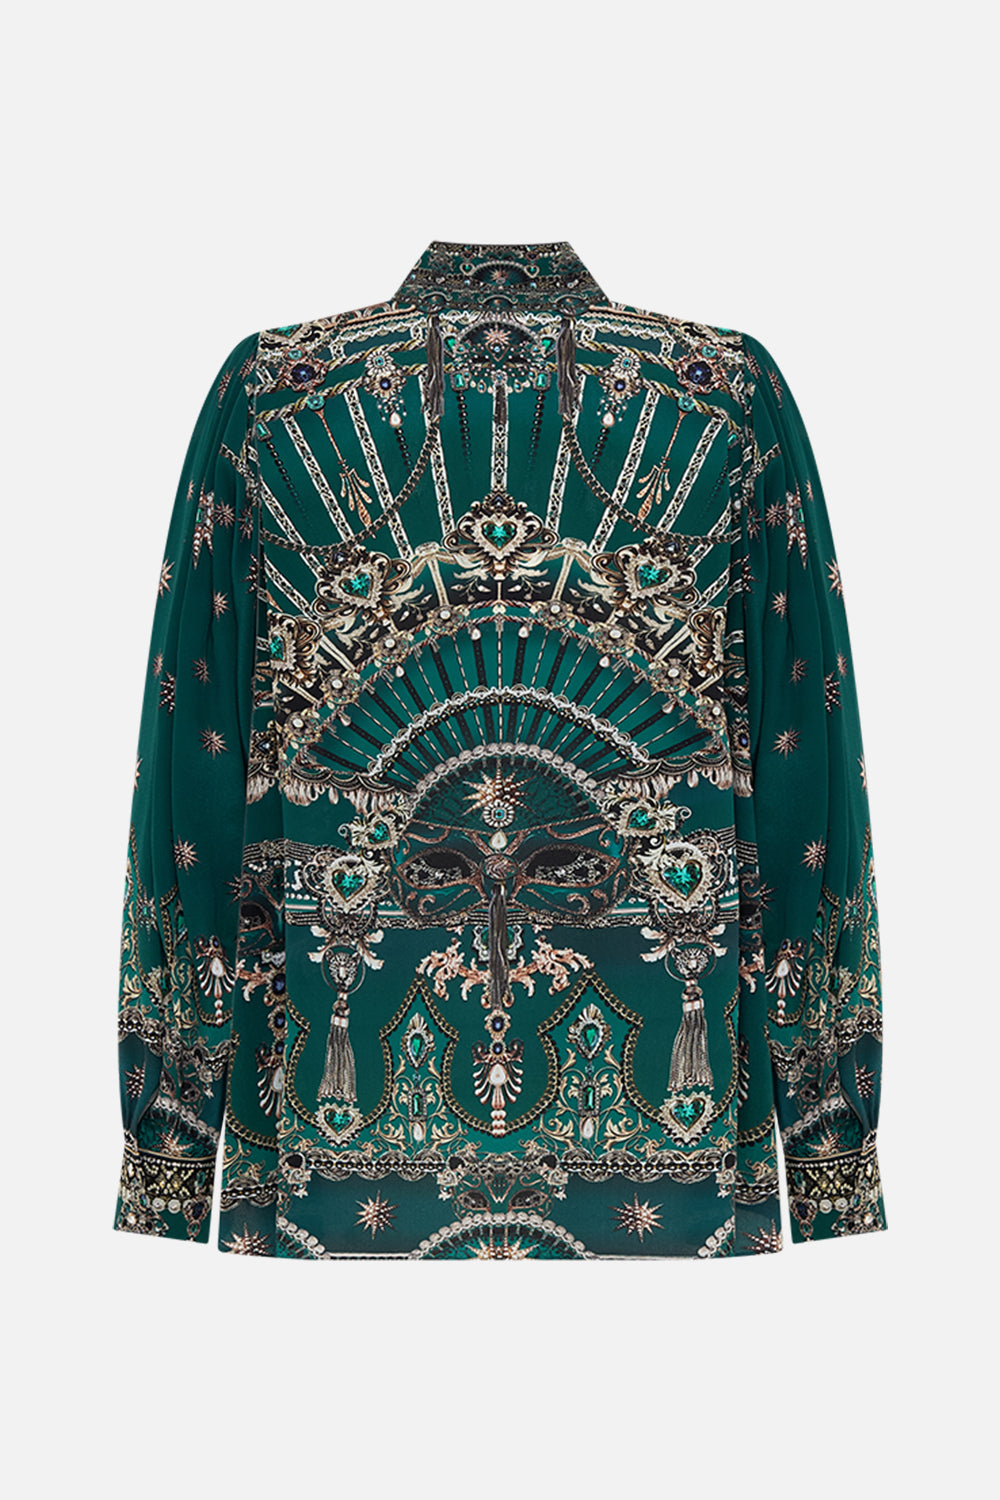 CAMILLA silk blouse in A Venice Veil print